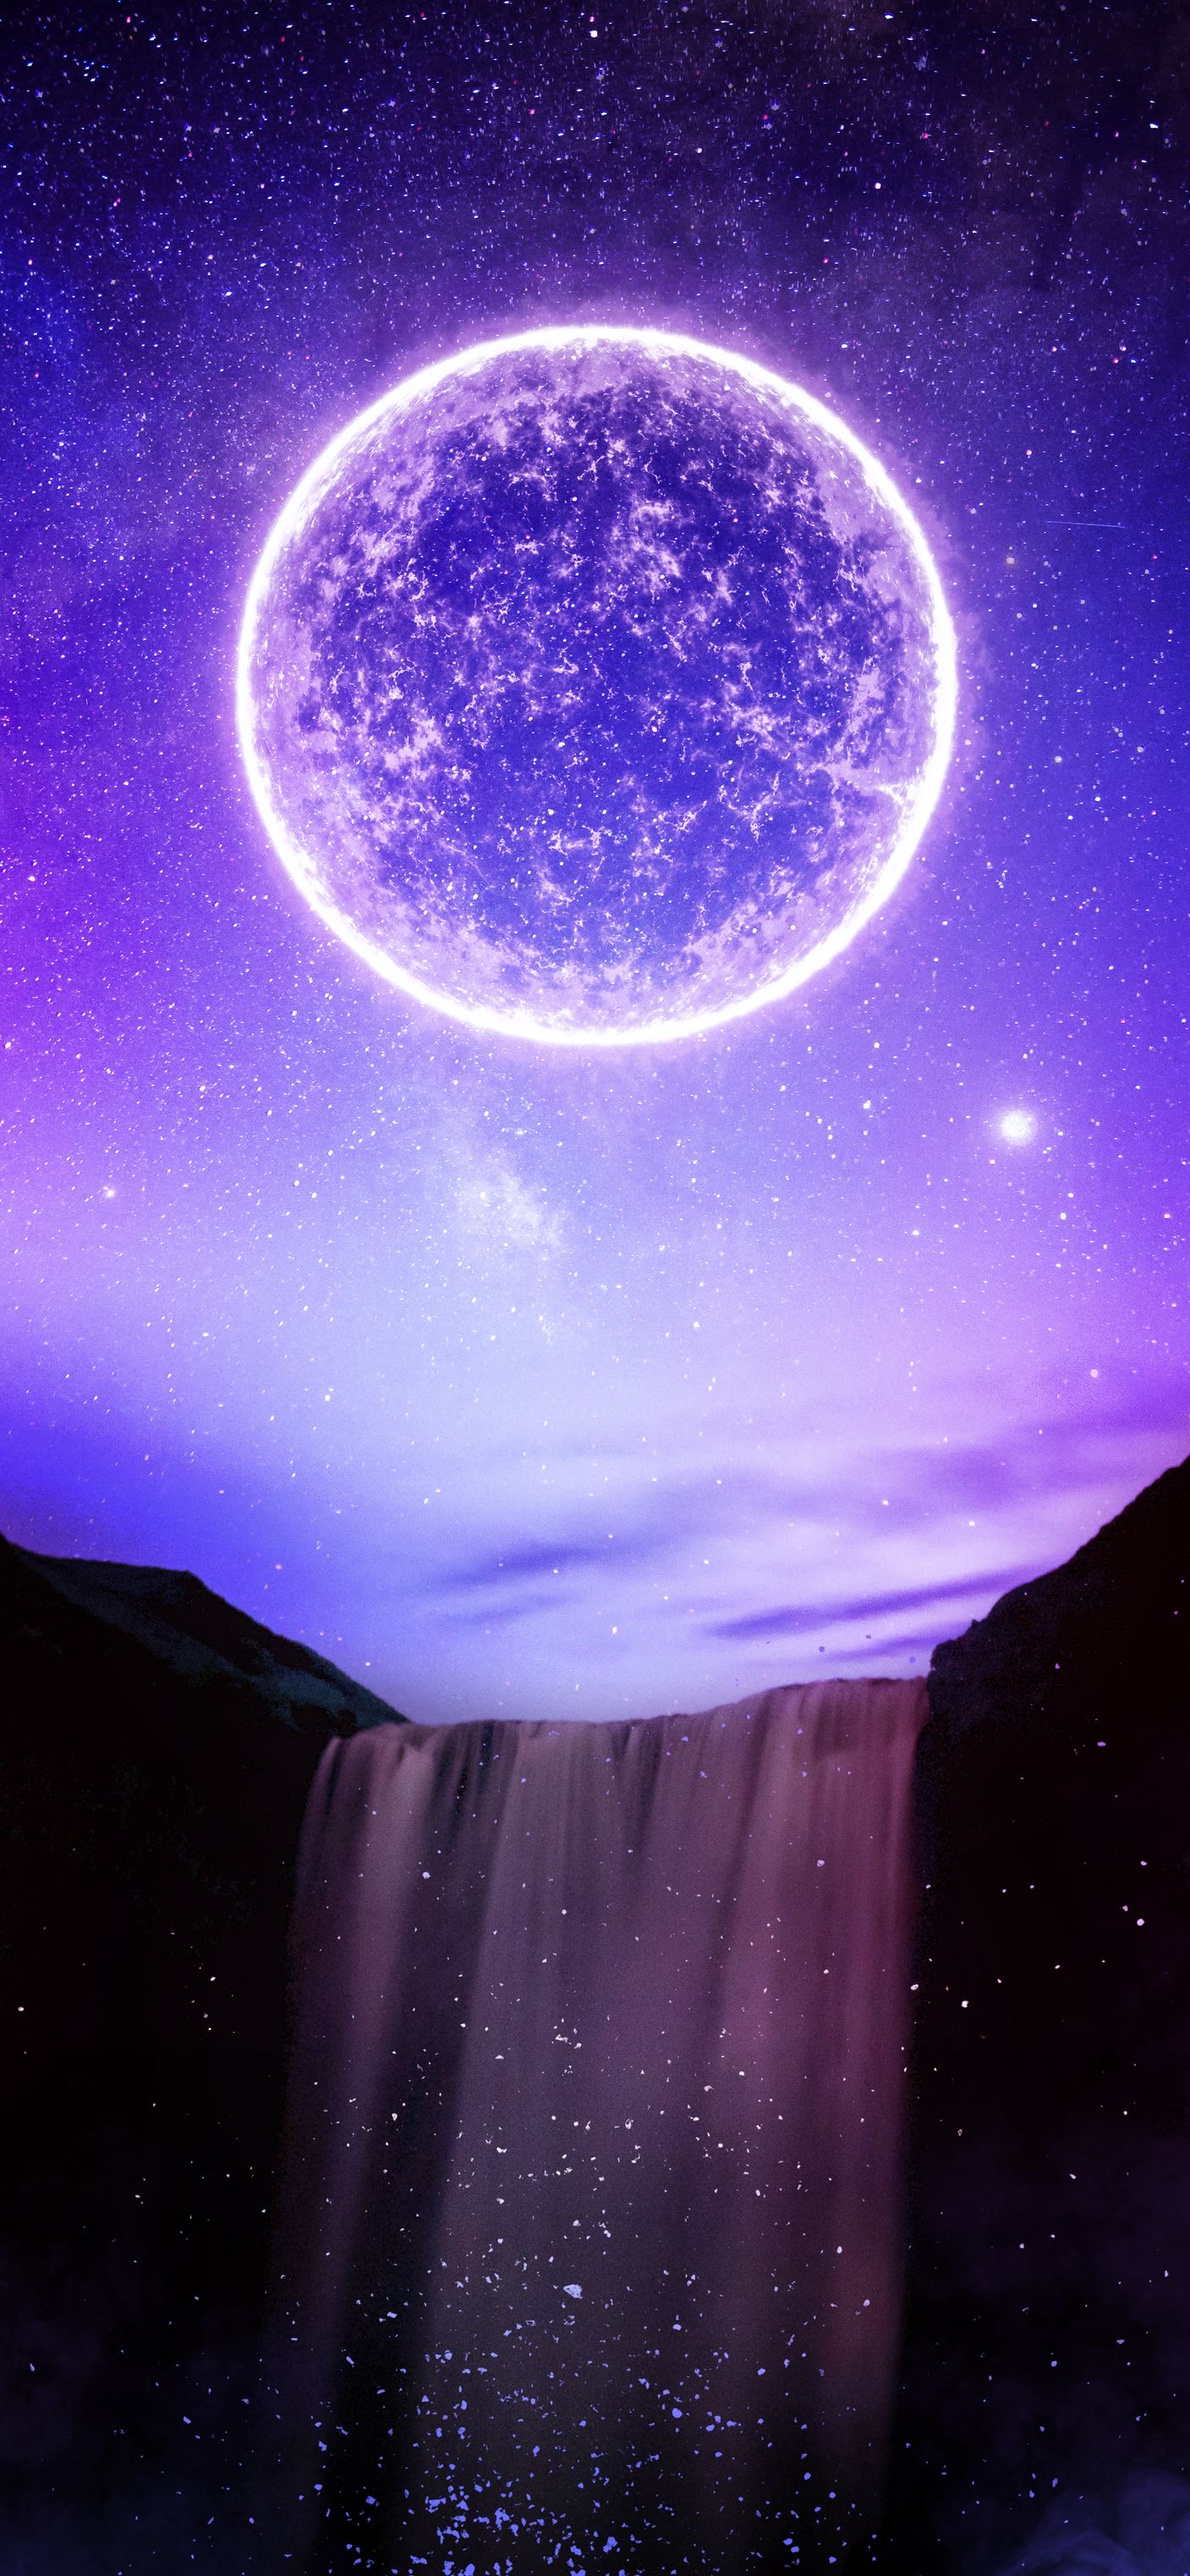 Premium Photo  Futuristic fantasy night landscape with light reflection in  water neon space galaxy portal 3d illustration